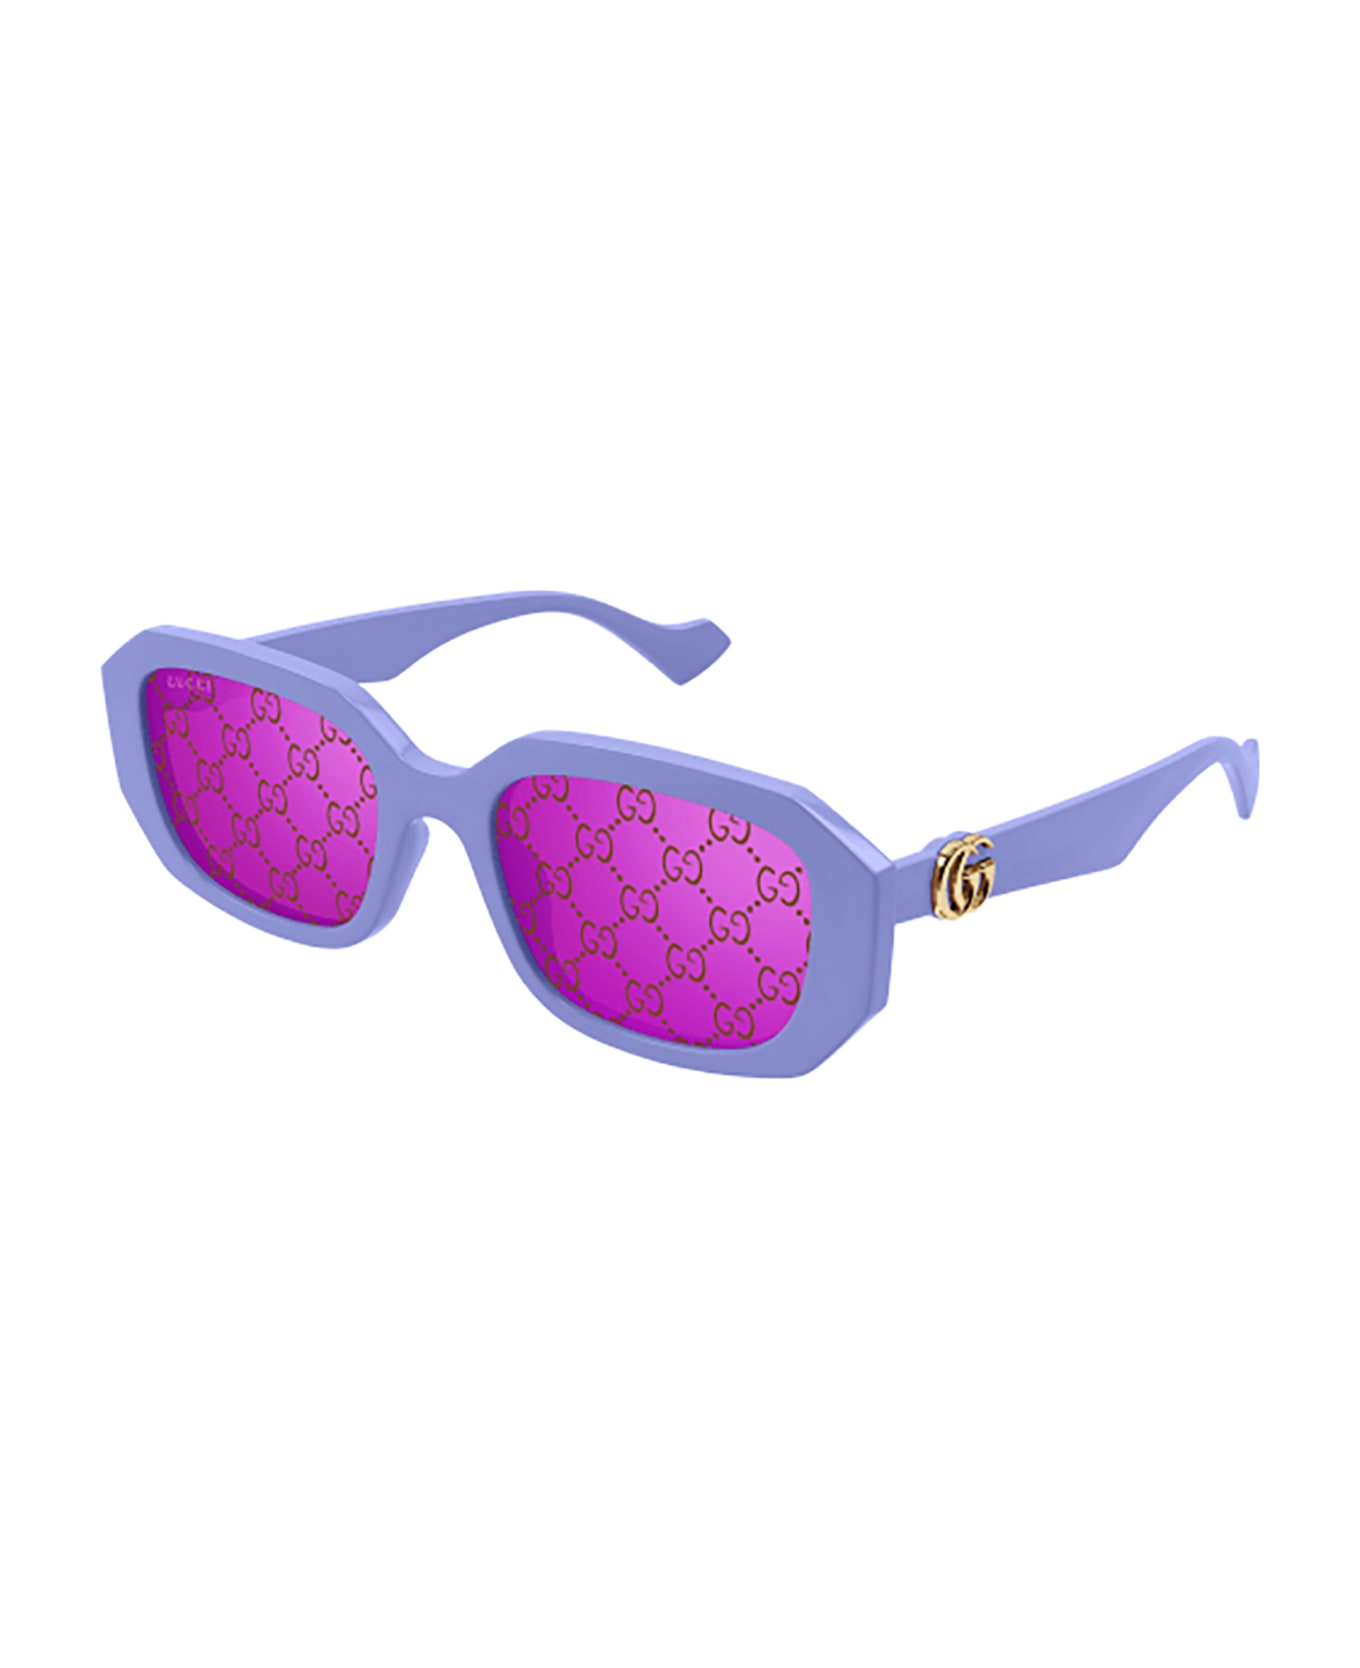 Gucci Eyewear GG1535S Sunglasses - Violet Violet Pink サングラス